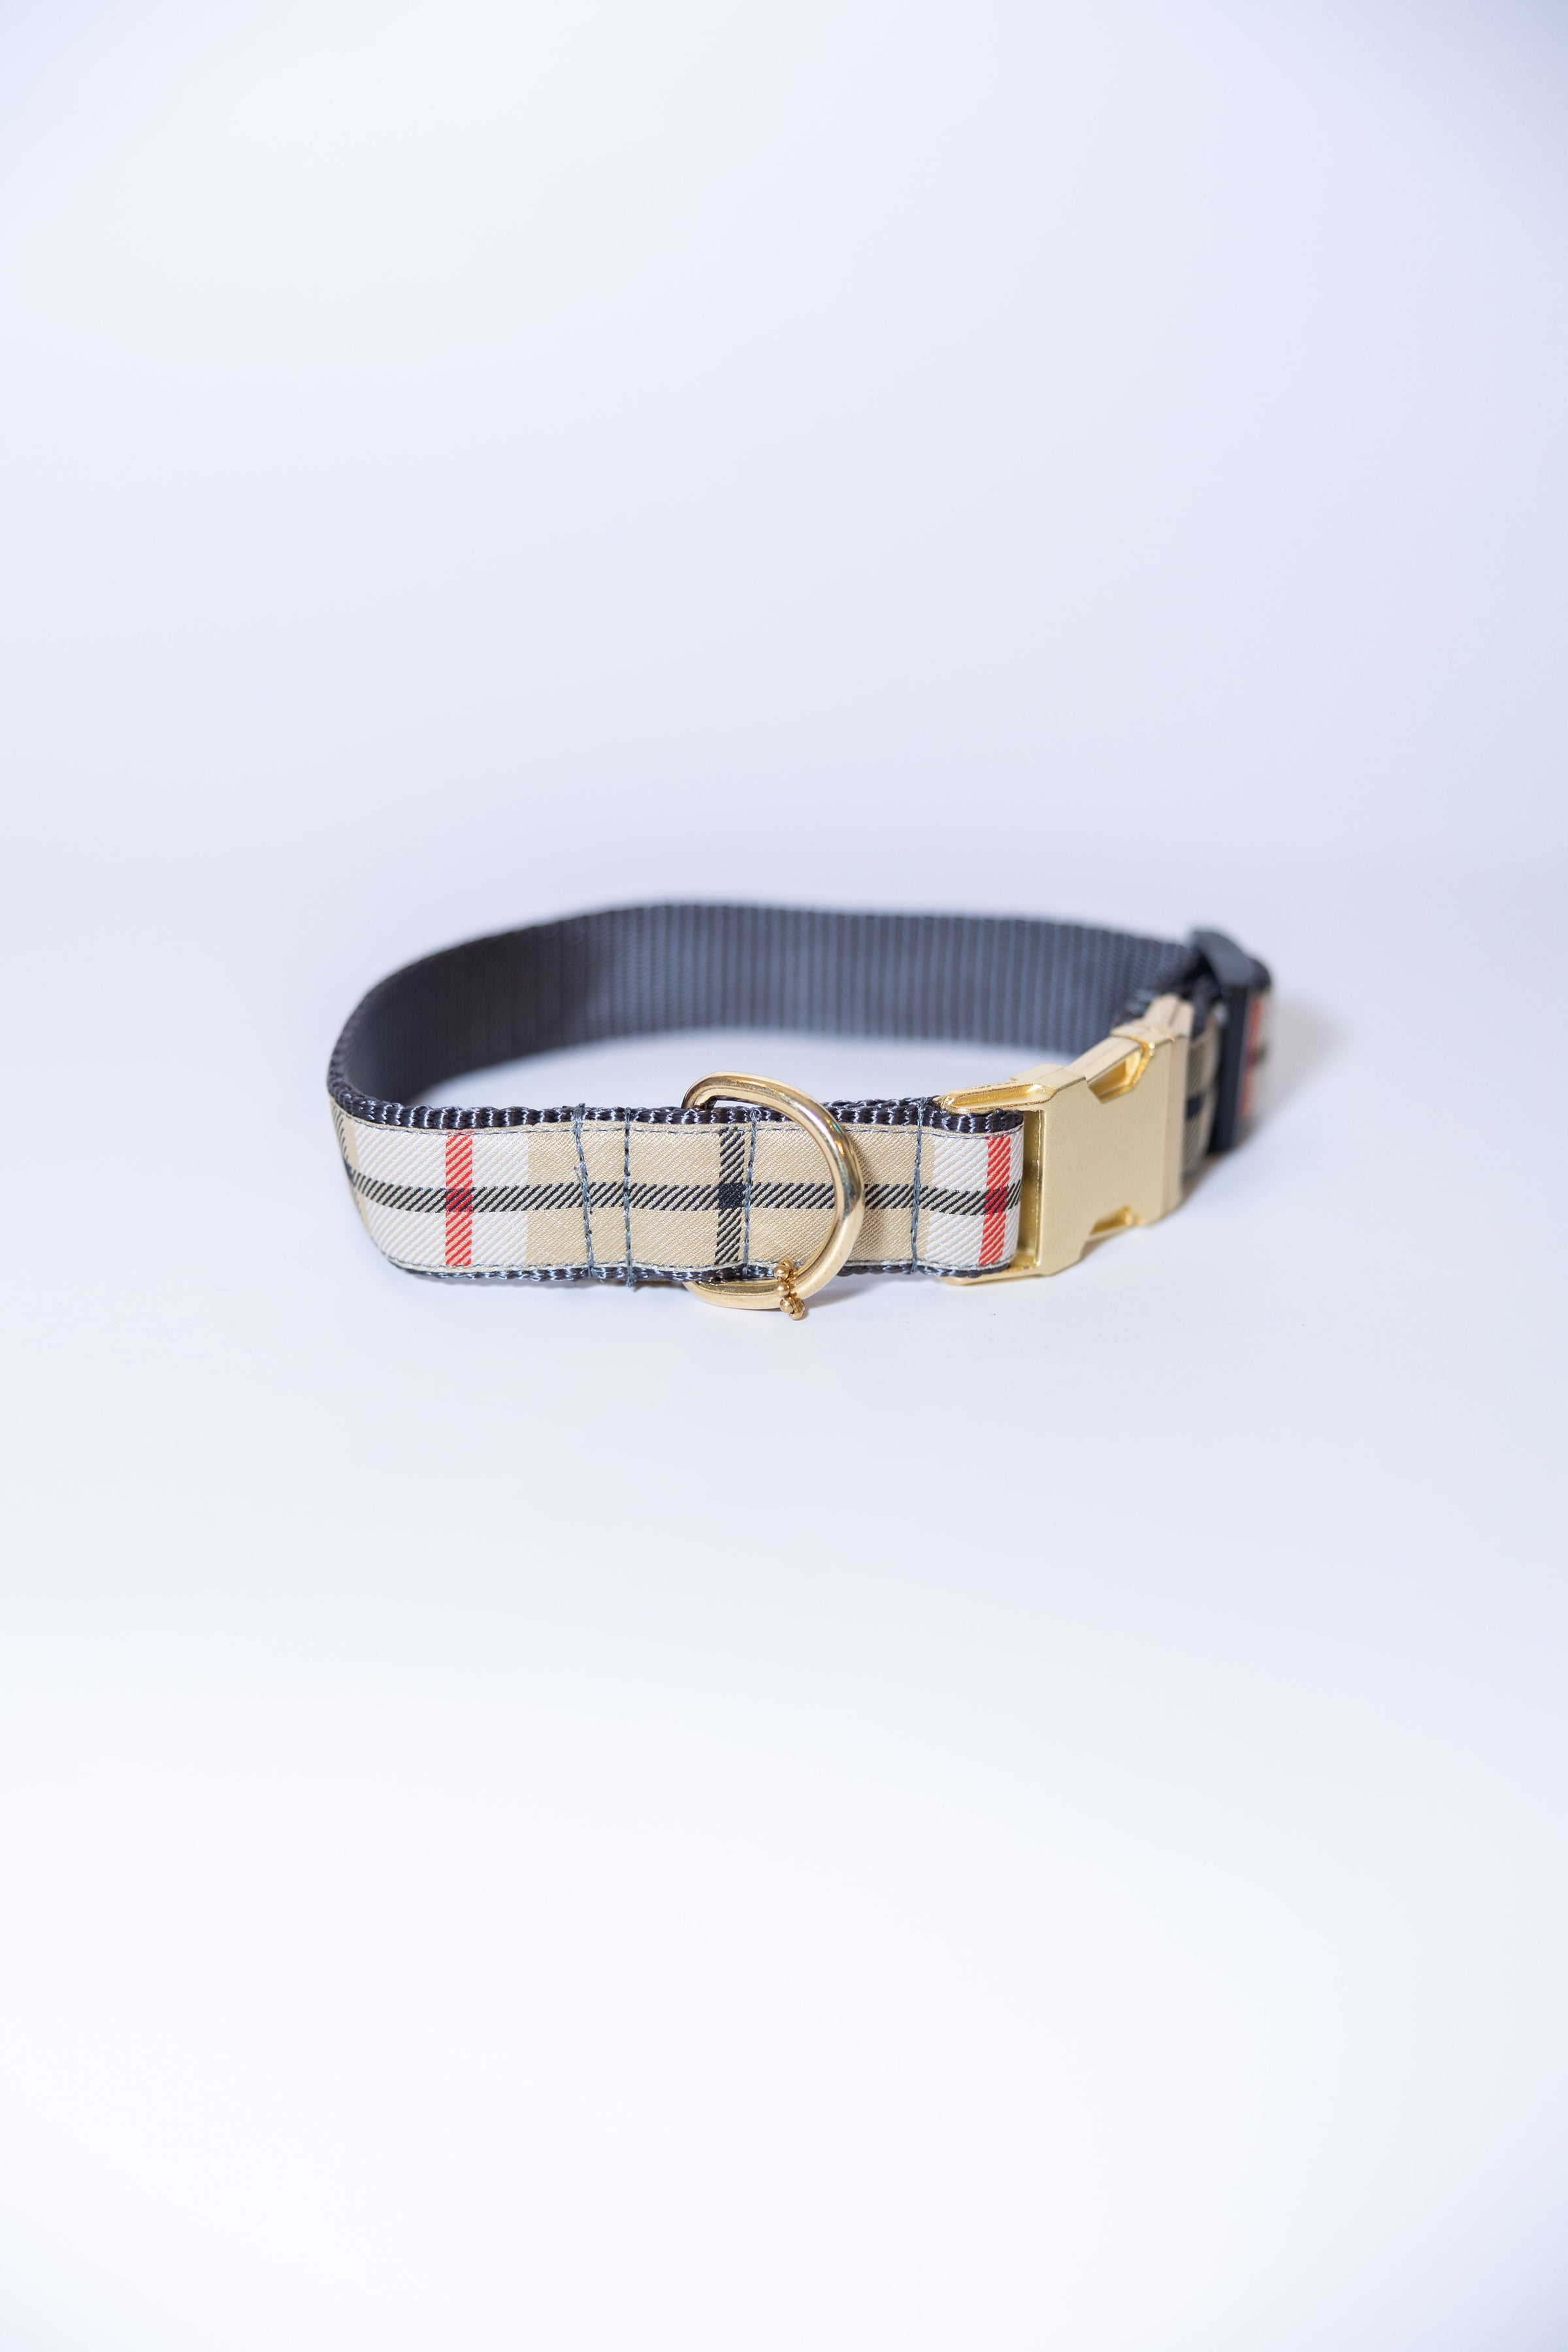 burberry dog collar